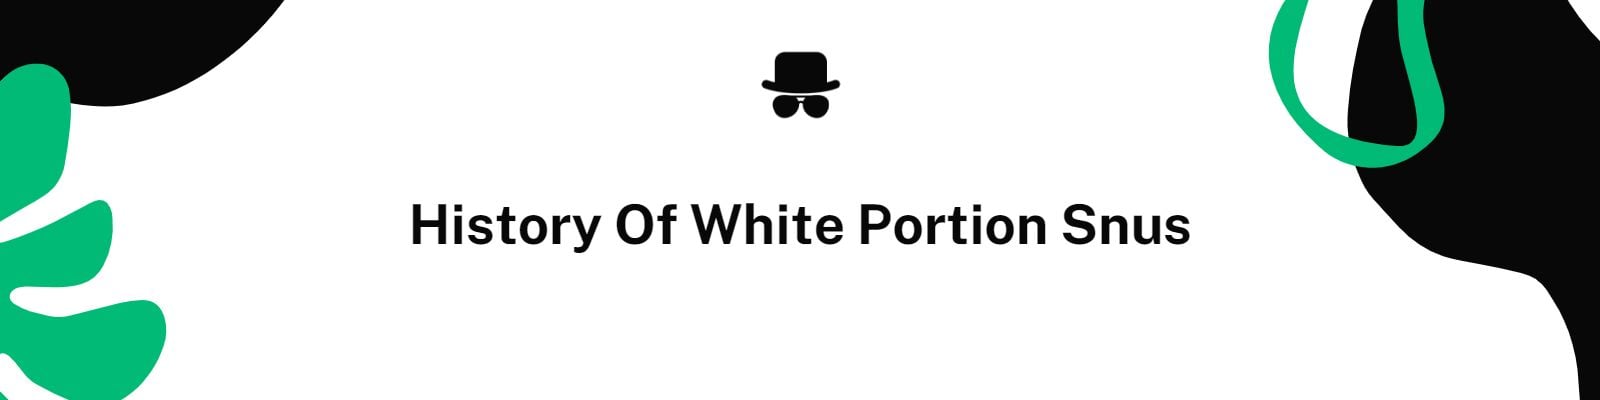 History of white portion snus